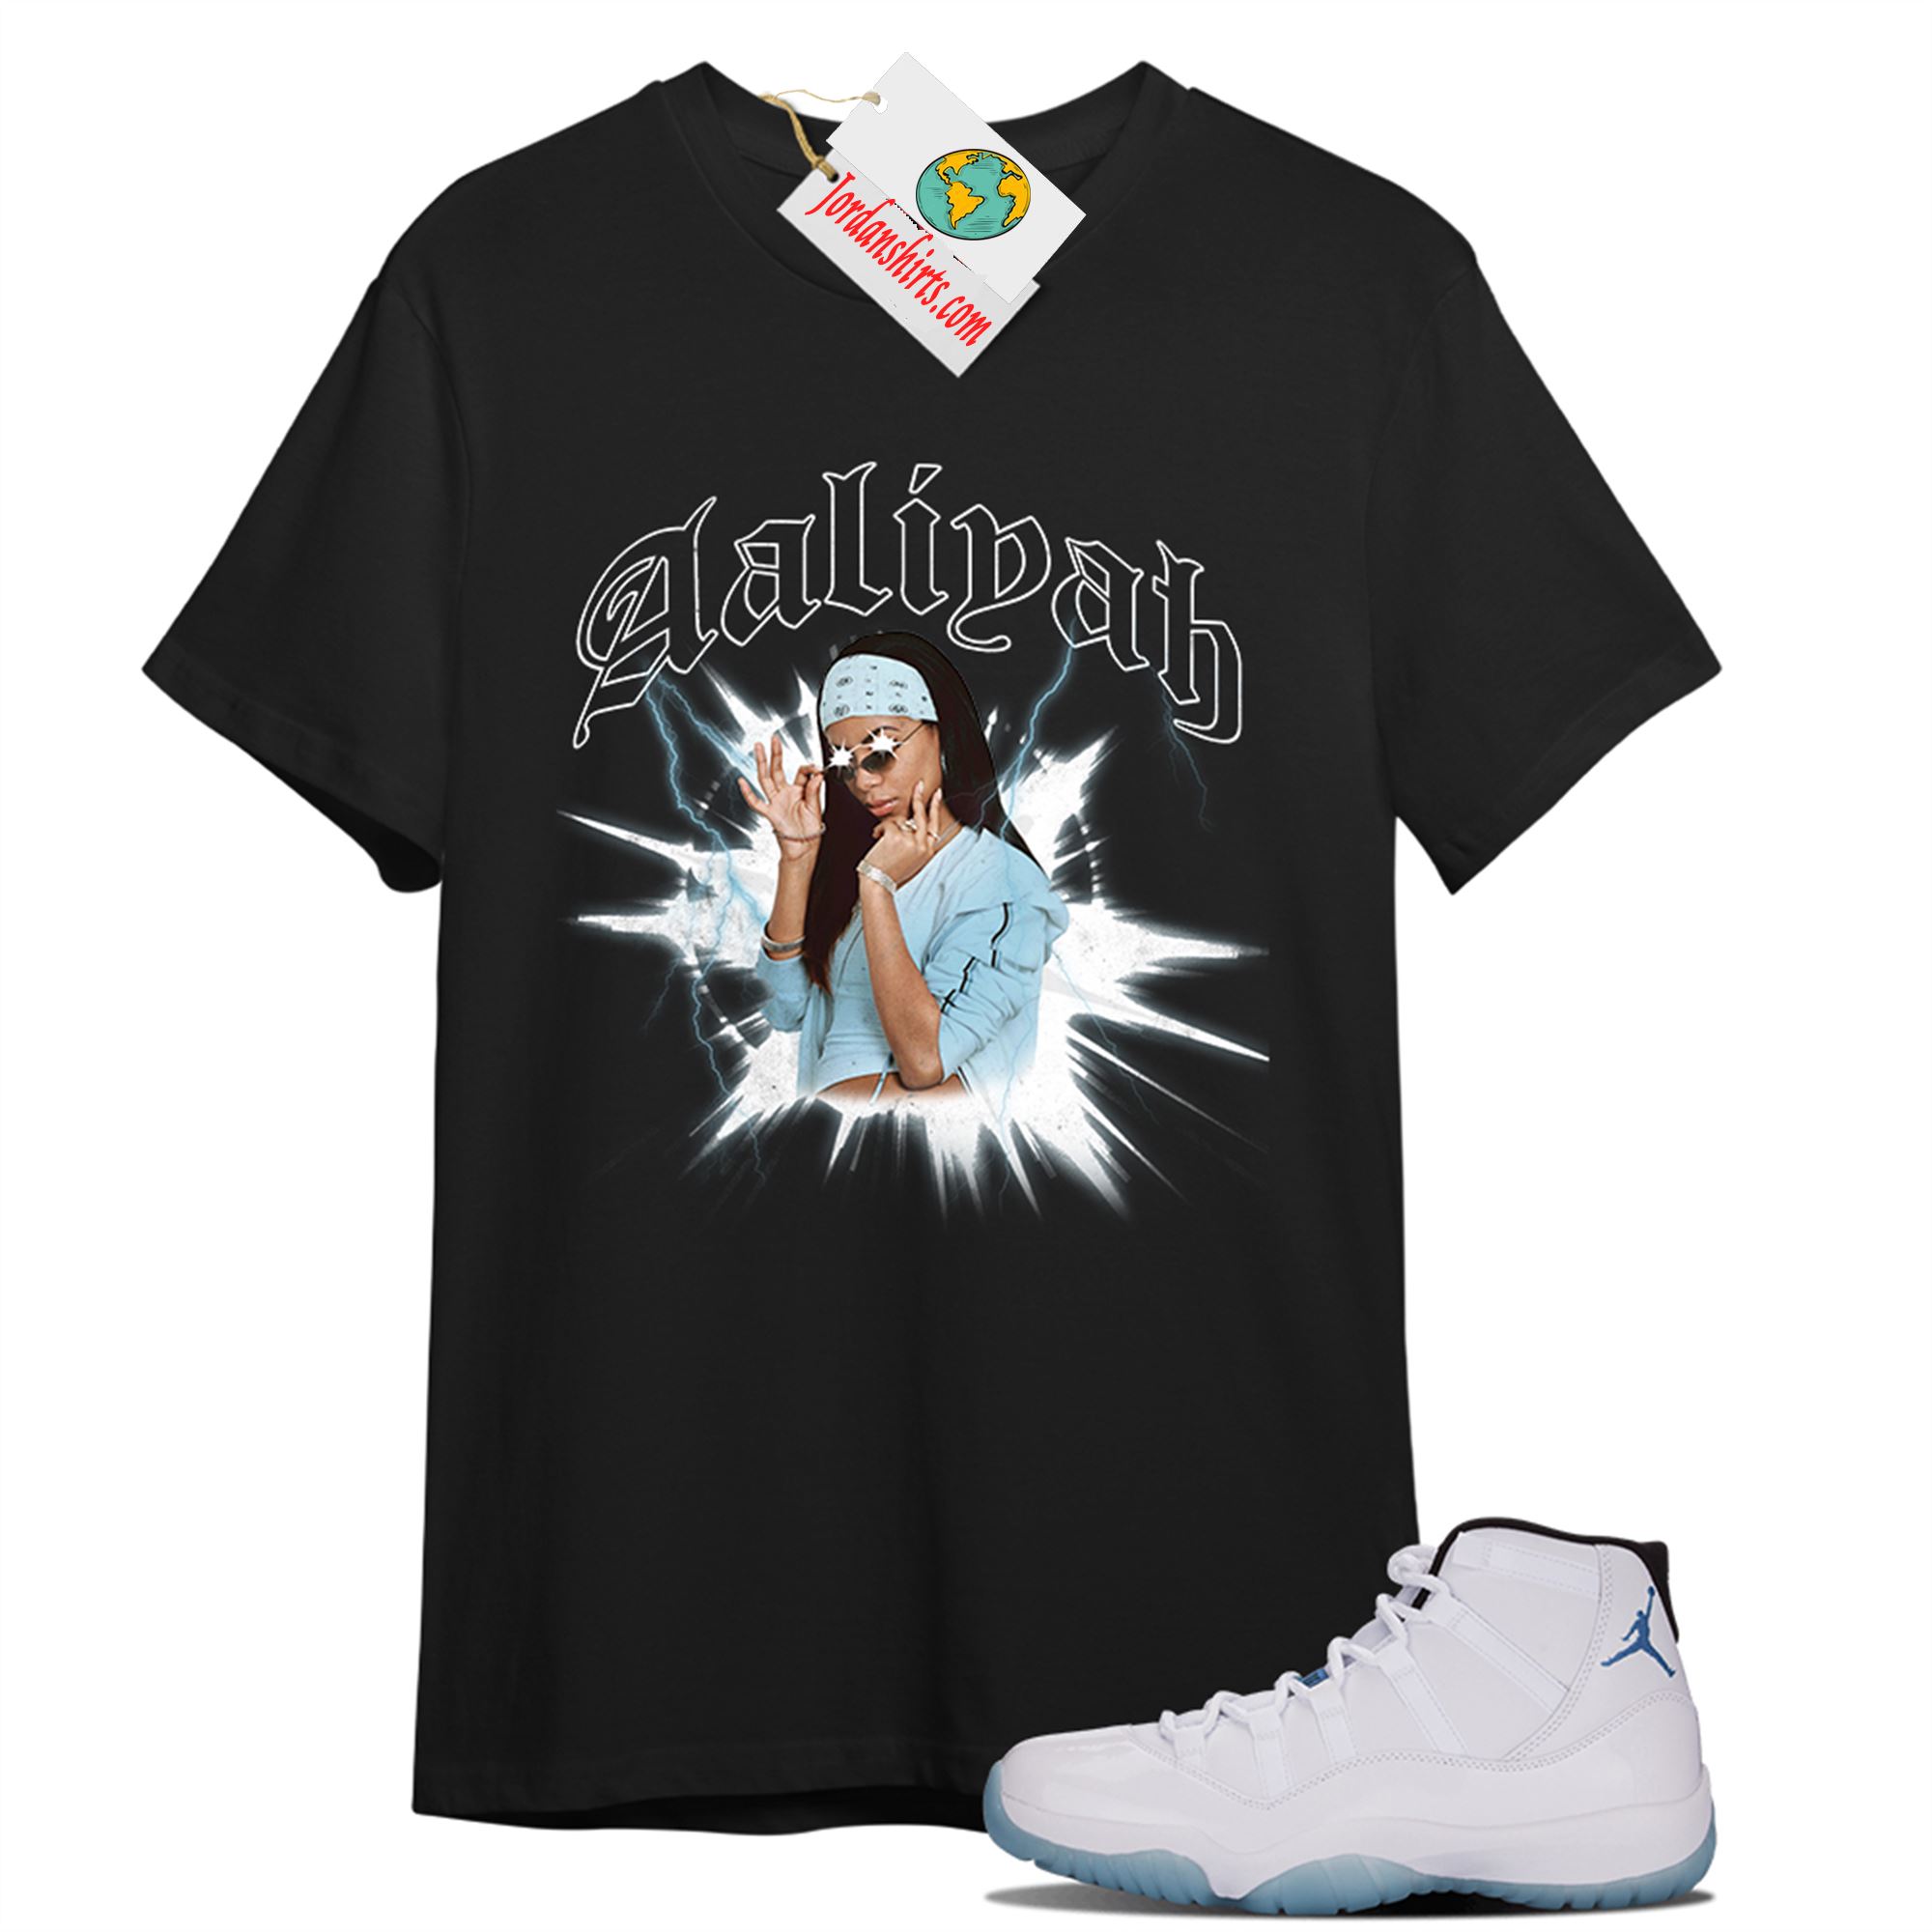 Jordan 11 Shirt, Legend Aaliyah Black T-shirt Air Jordan 11 Legend Blue 11s Size Up To 5xl